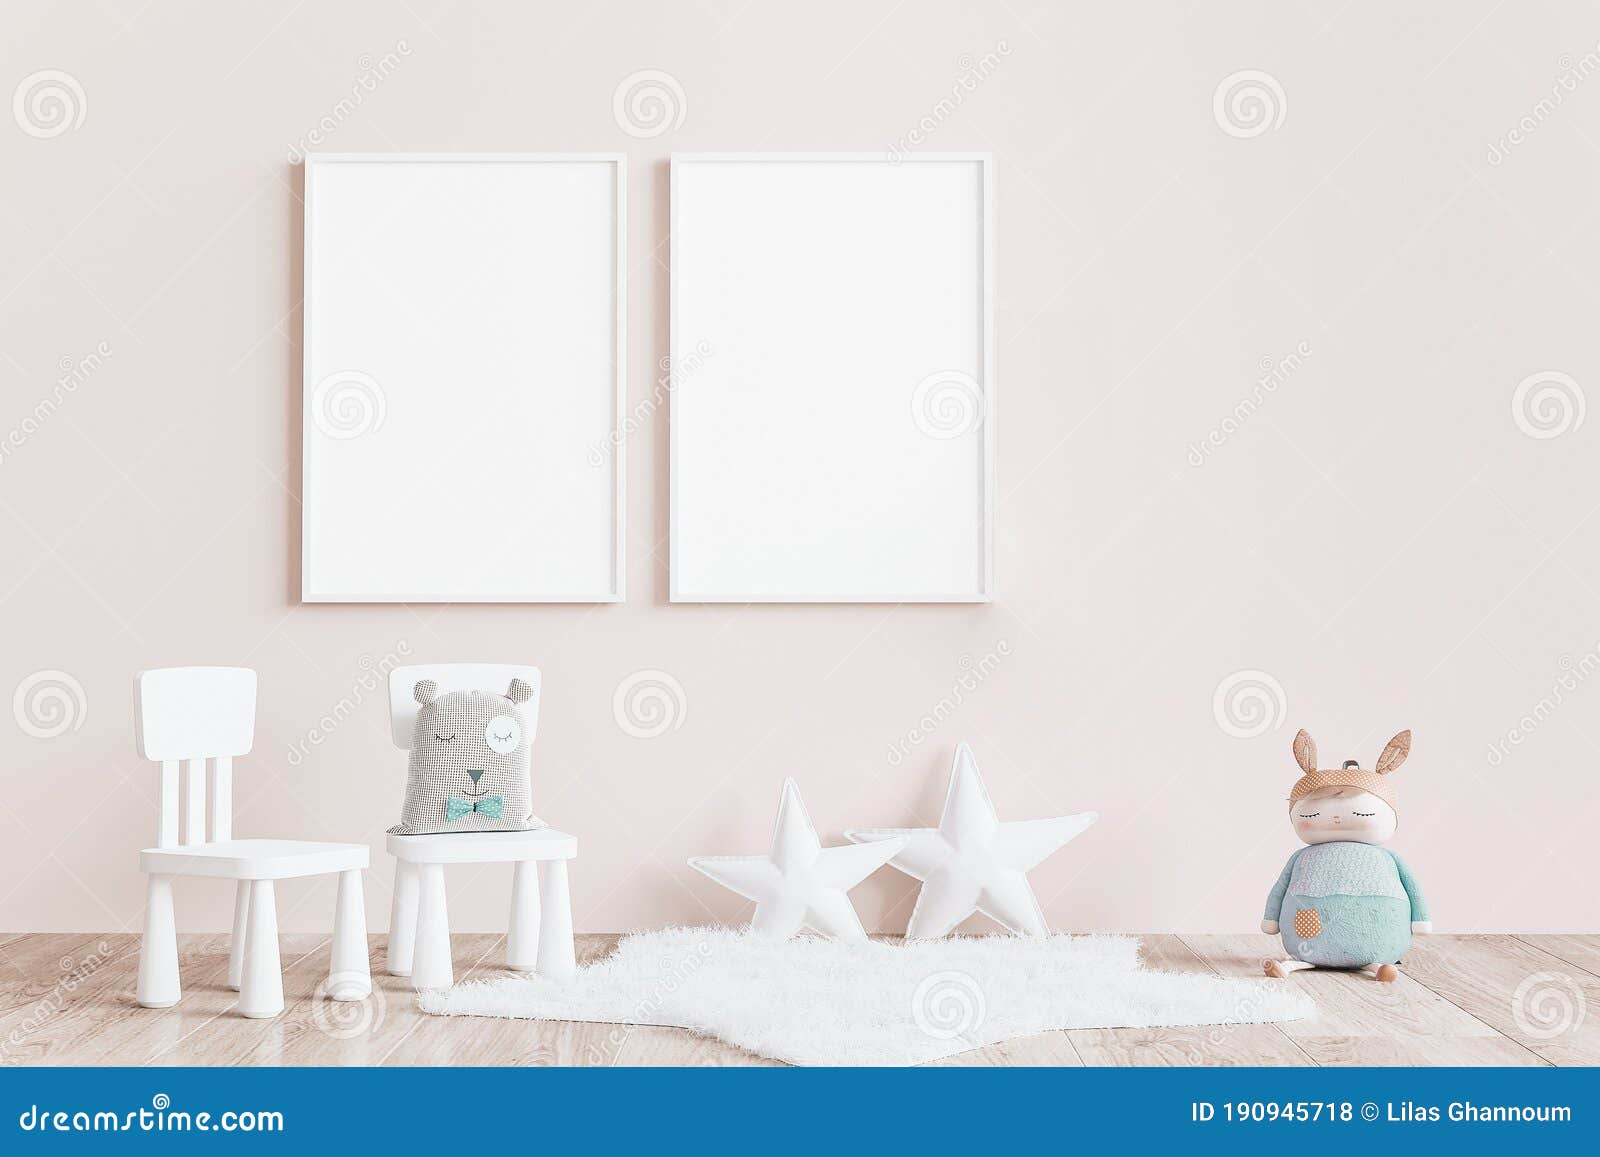 modern minimalist, kid`s room, empty frame mock up interior in pastel colors